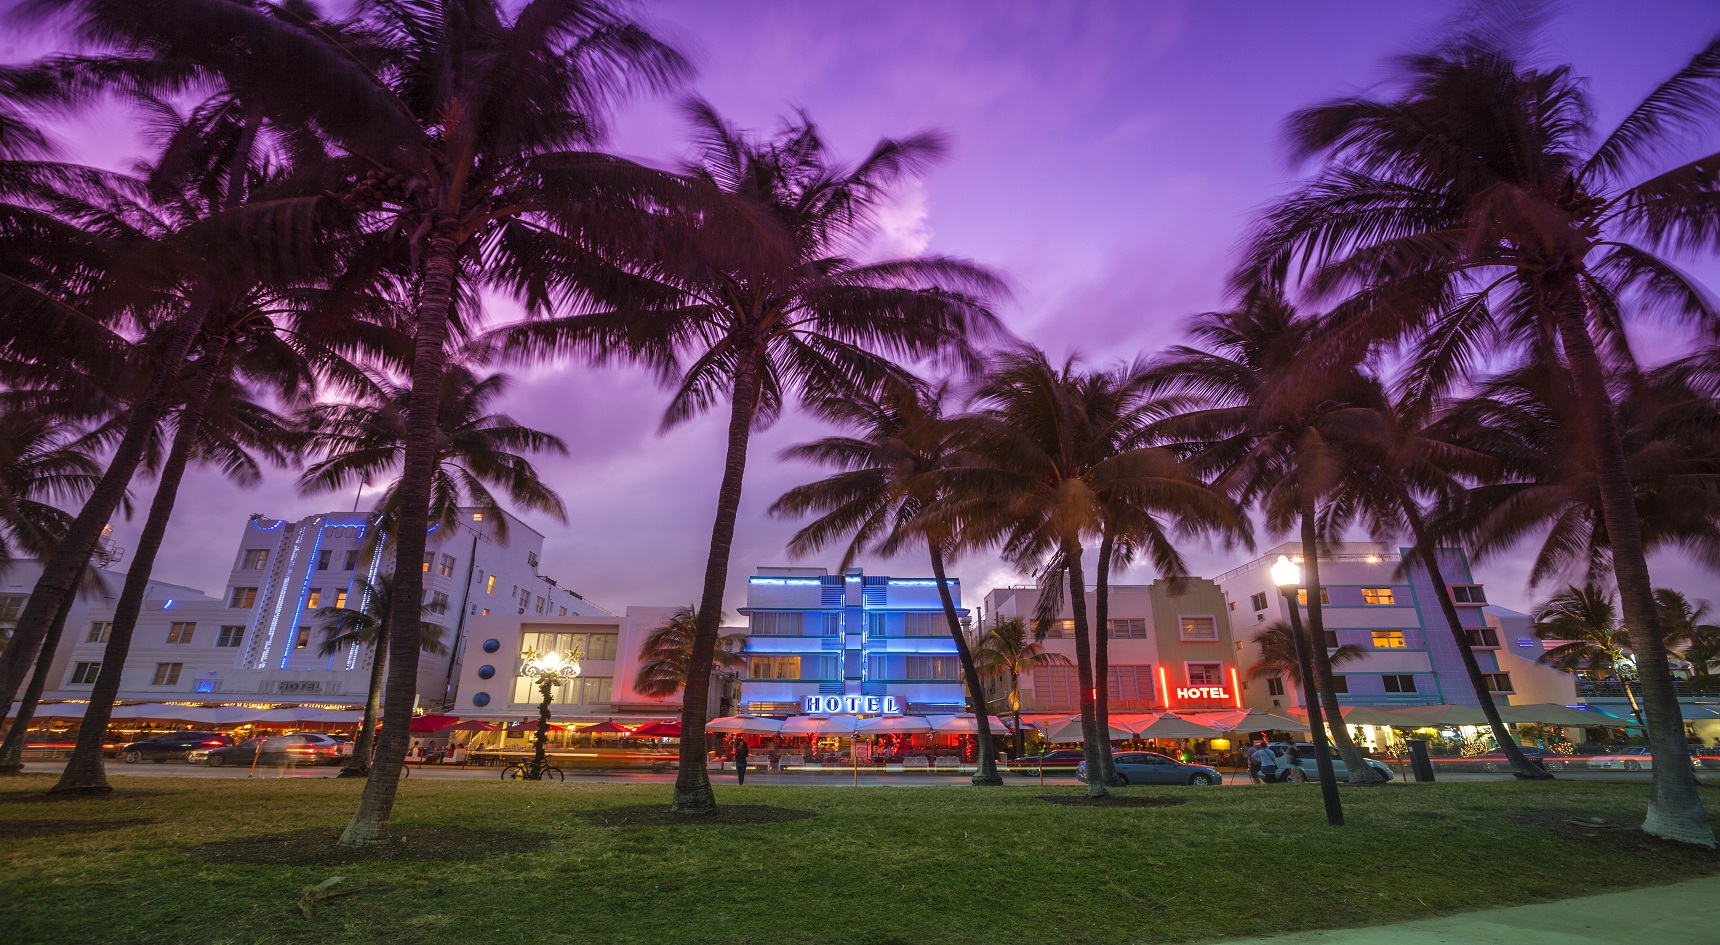 Ocean Drive at night, Miami